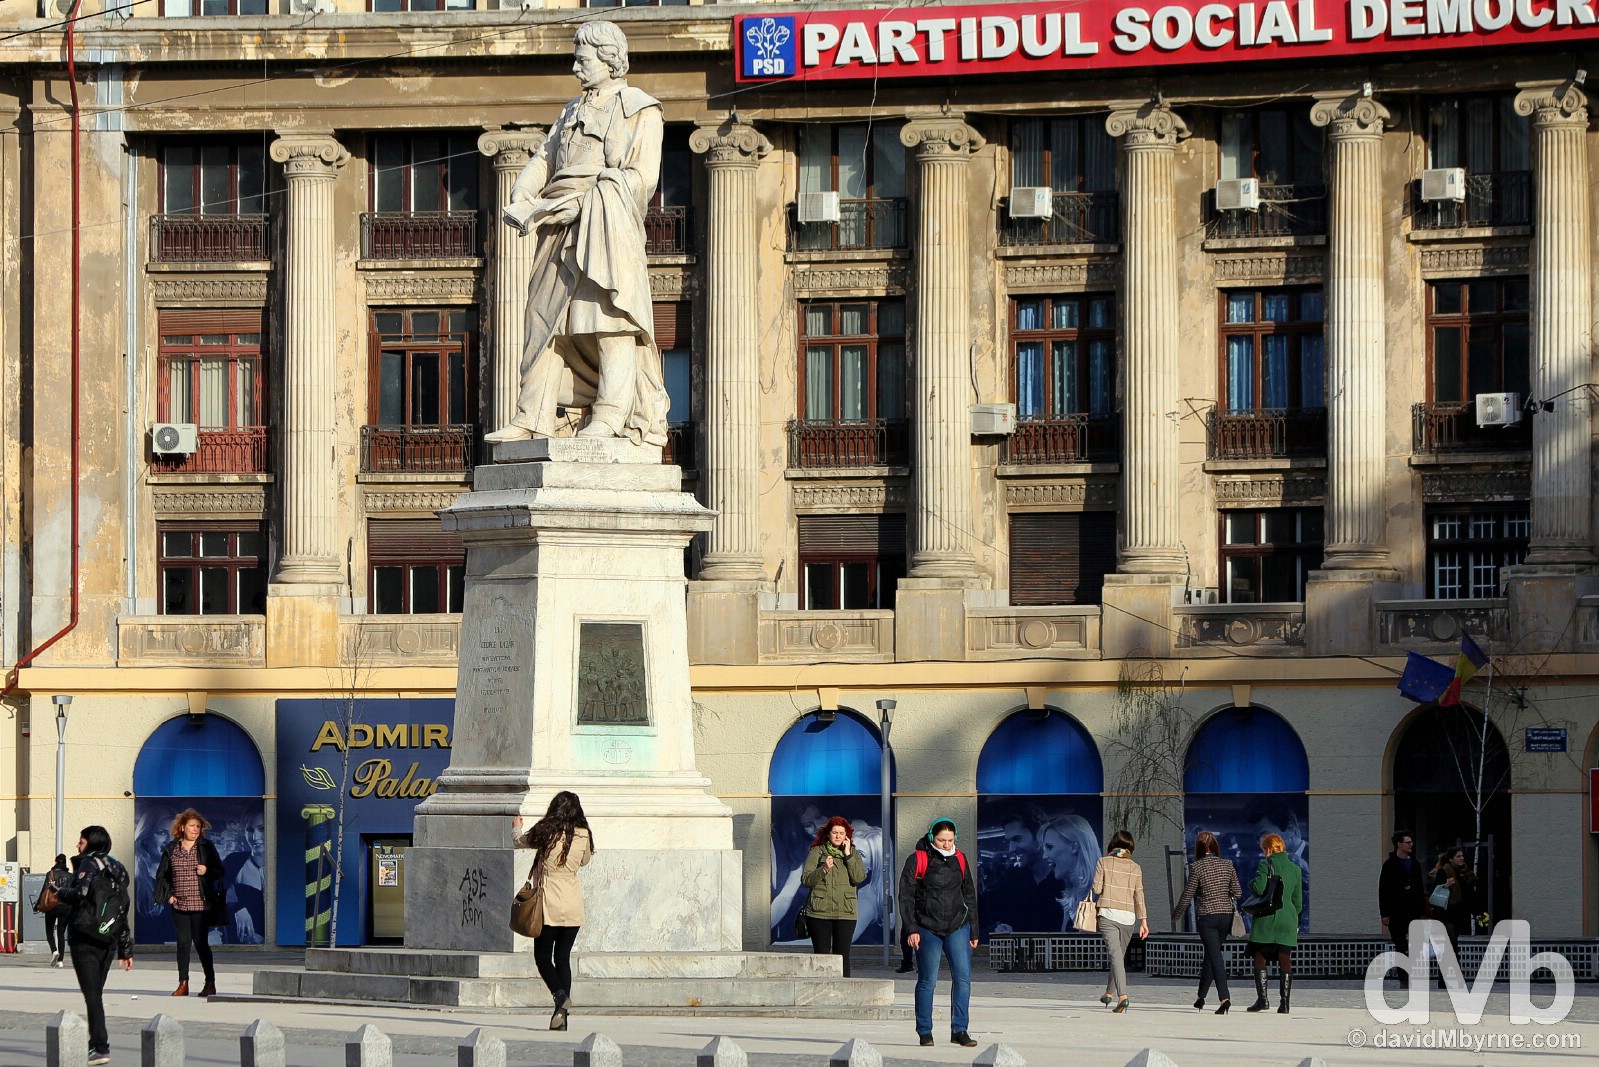 Piata Universitatii (University Square), Bucharest, Romania. April 1, 2015.